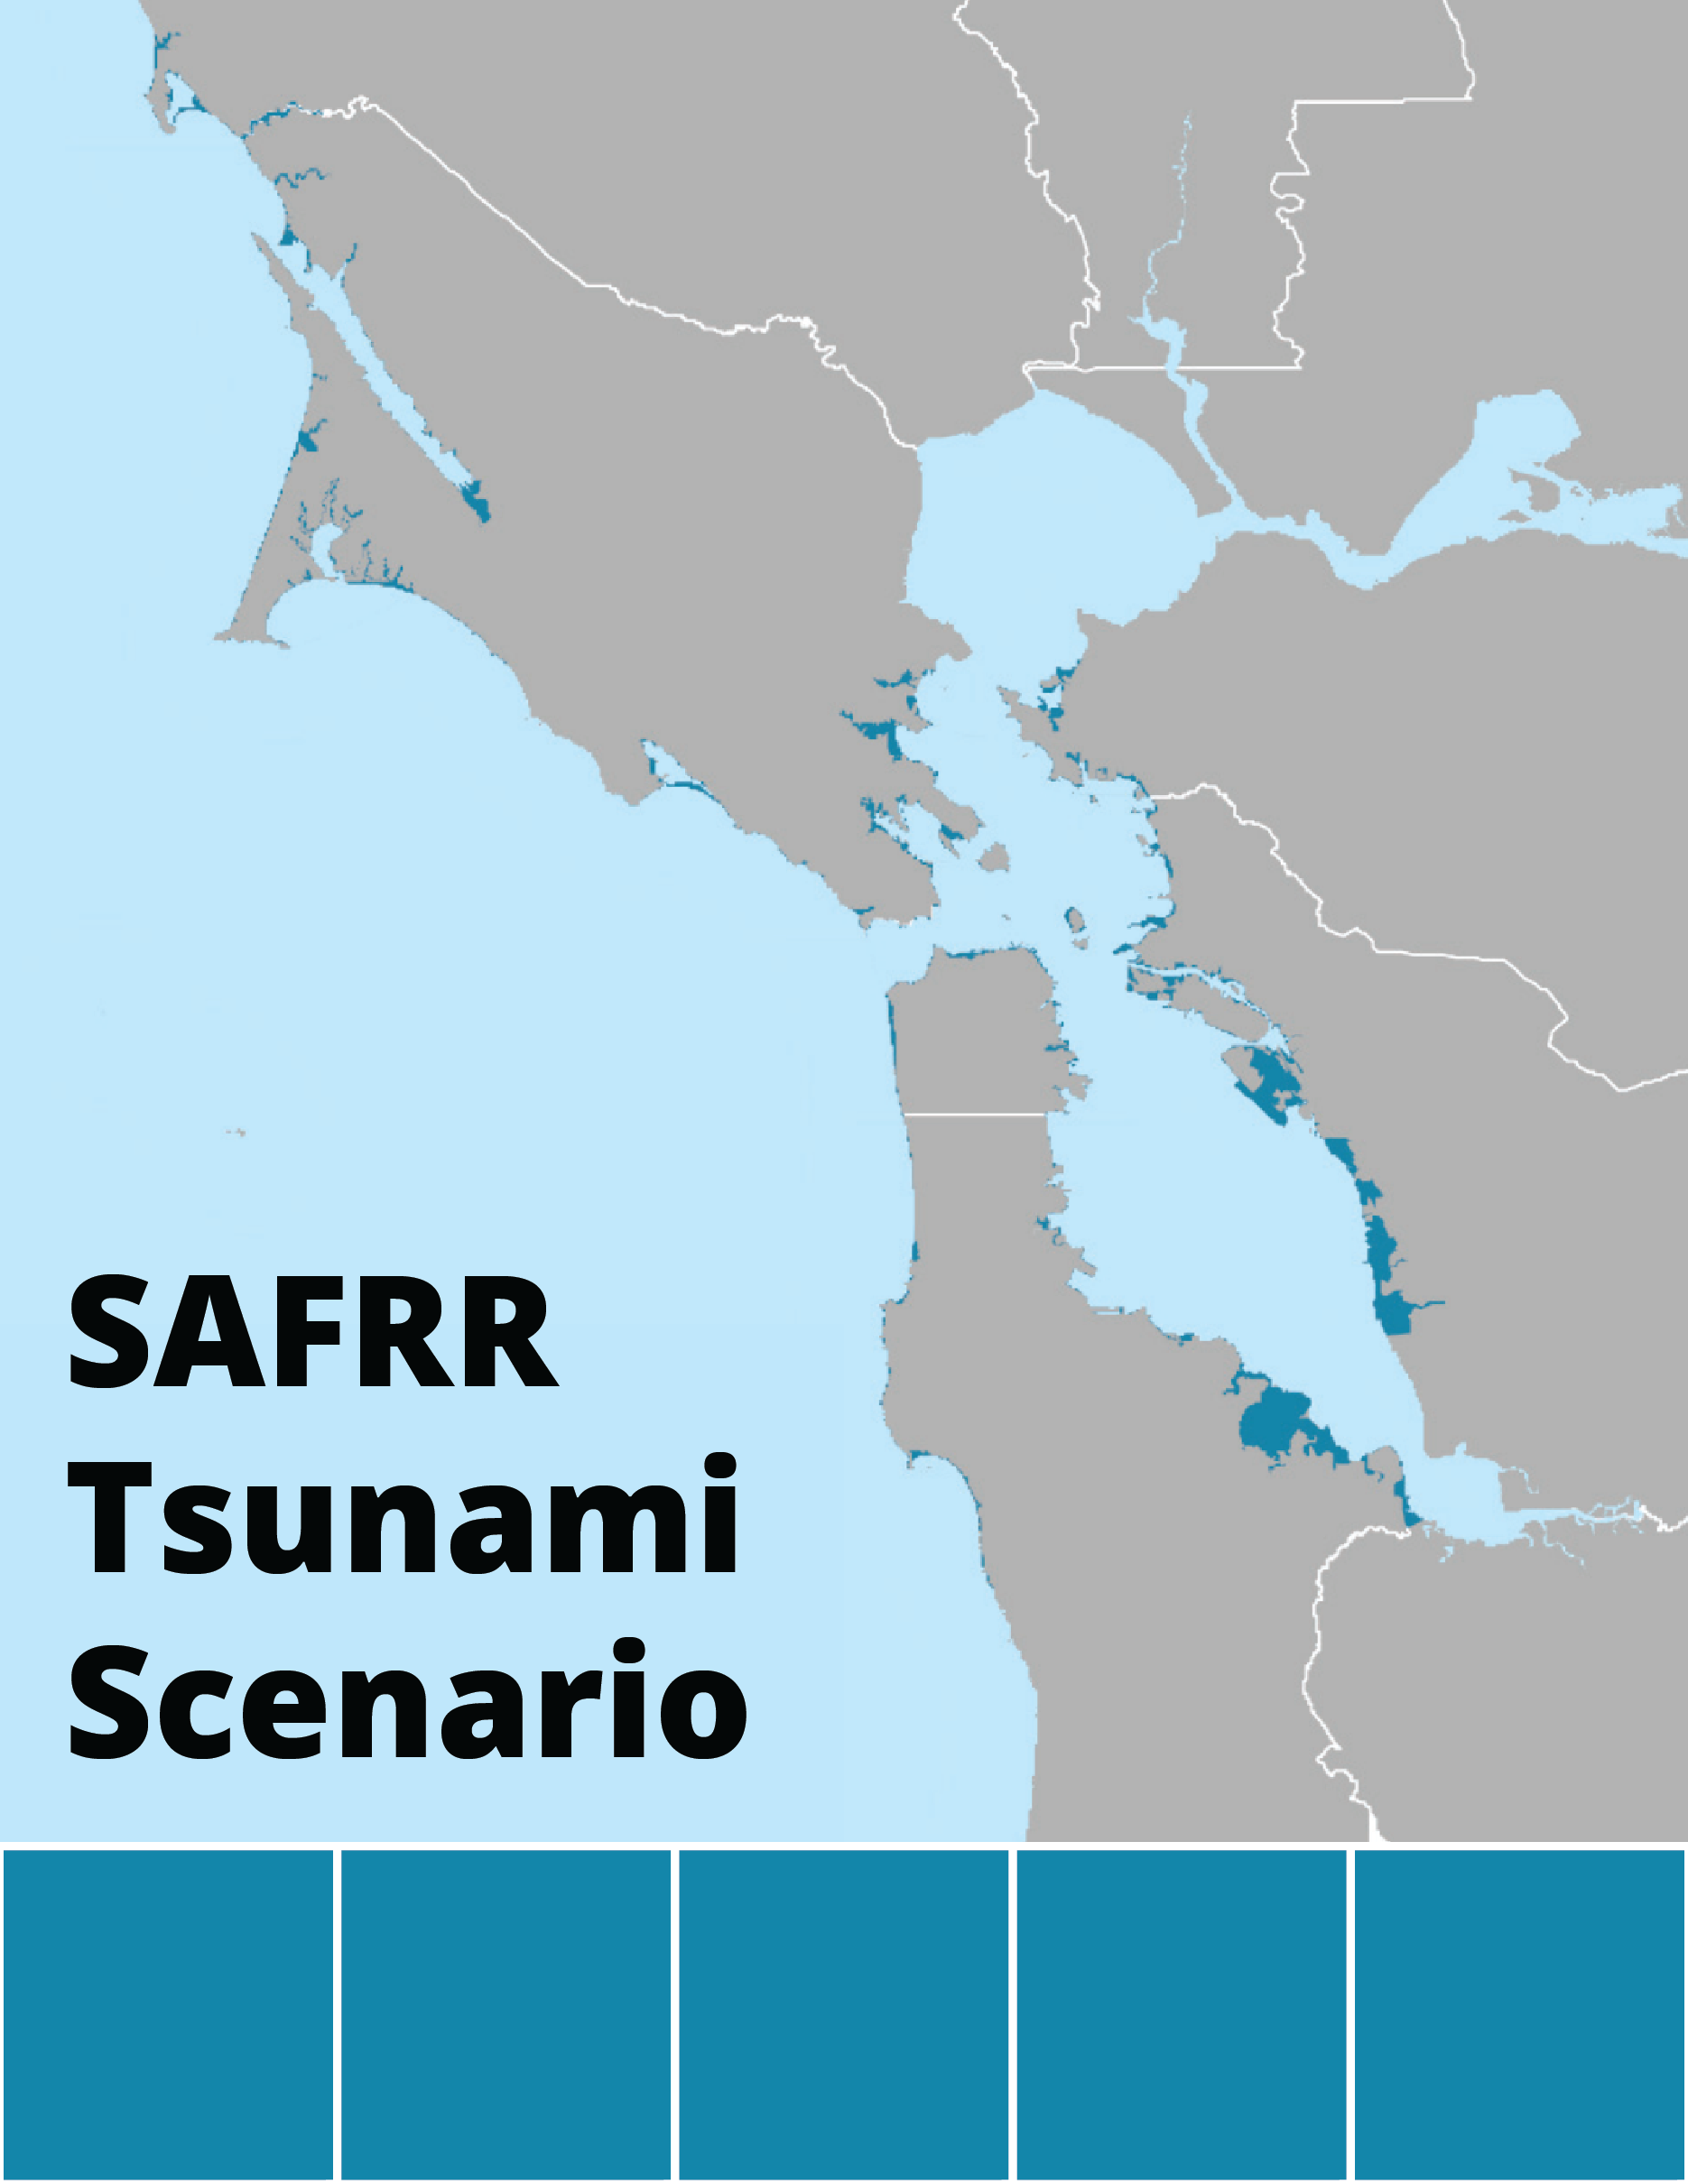 The SAFRR (Science Application for Risk Reduction) Tsunami Scenario